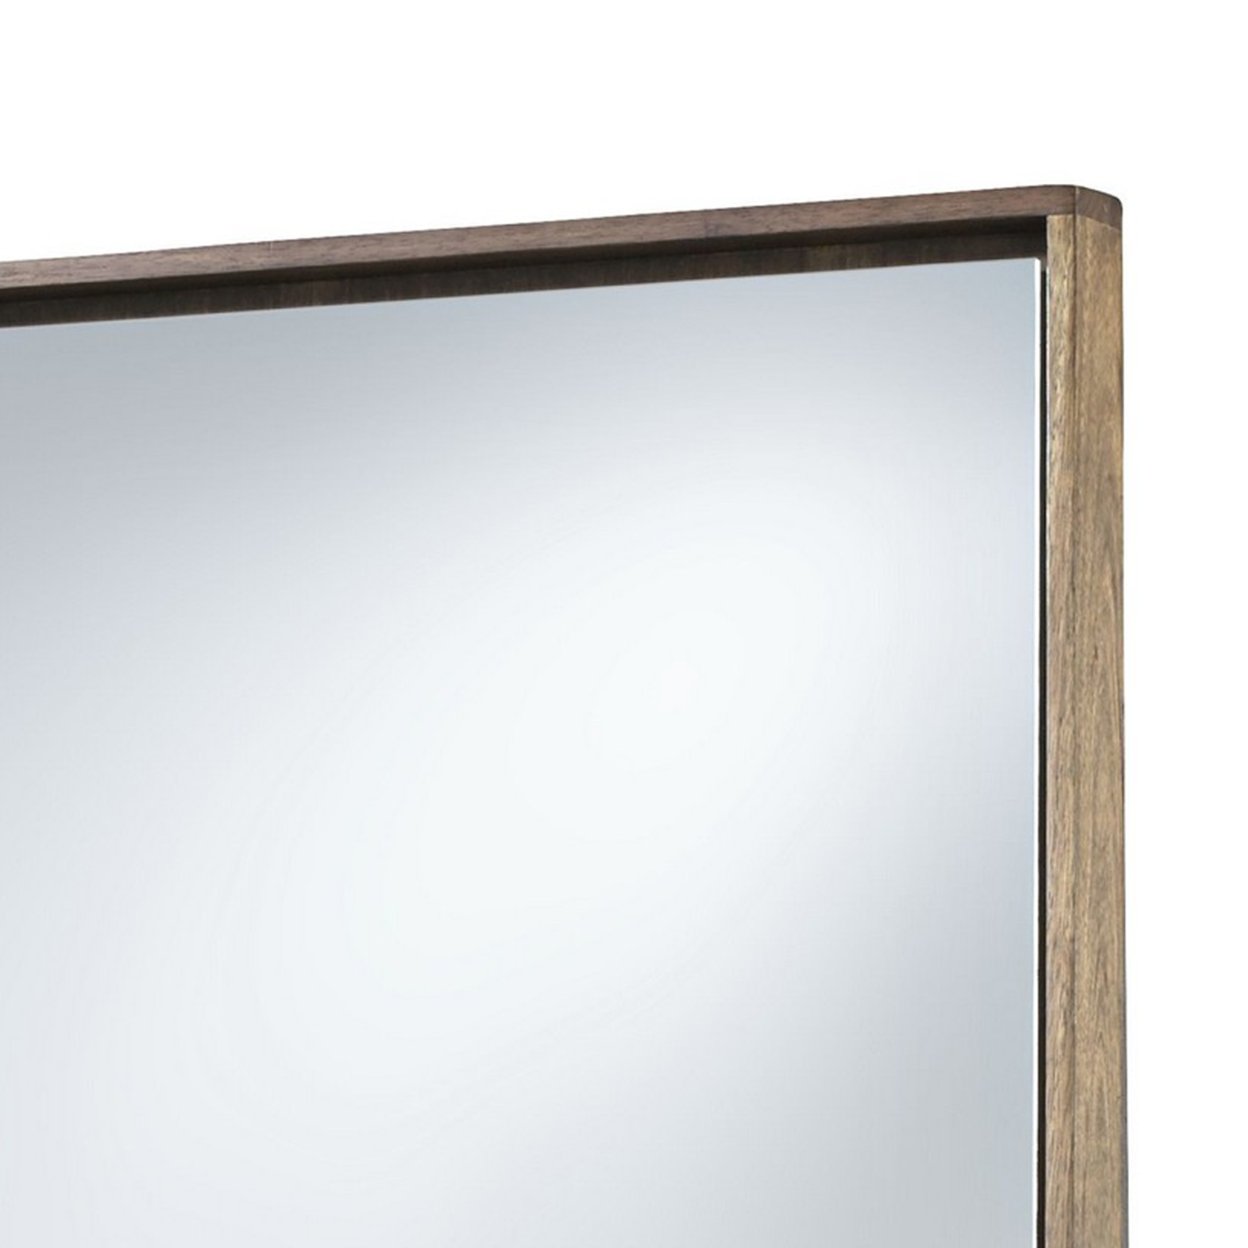 Rectangular Wooden Frame Incased Mirror With Raised Edges, Natural Brown- Saltoro Sherpi